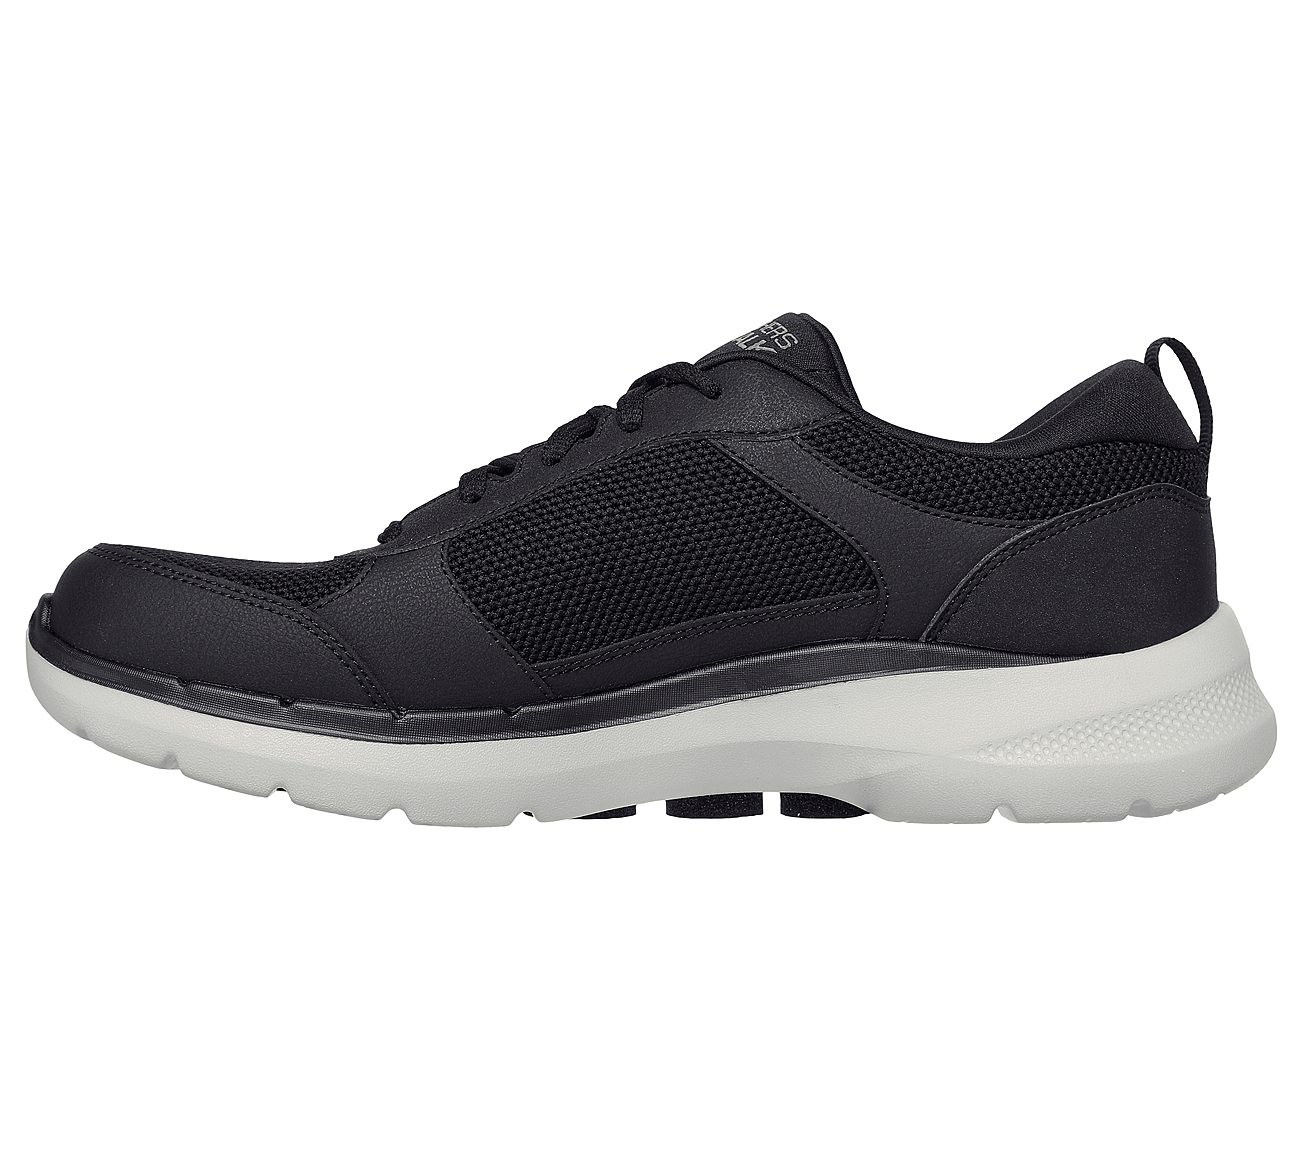 GO WALK 6 - COMPETE, BLACK/GREY Footwear Left View